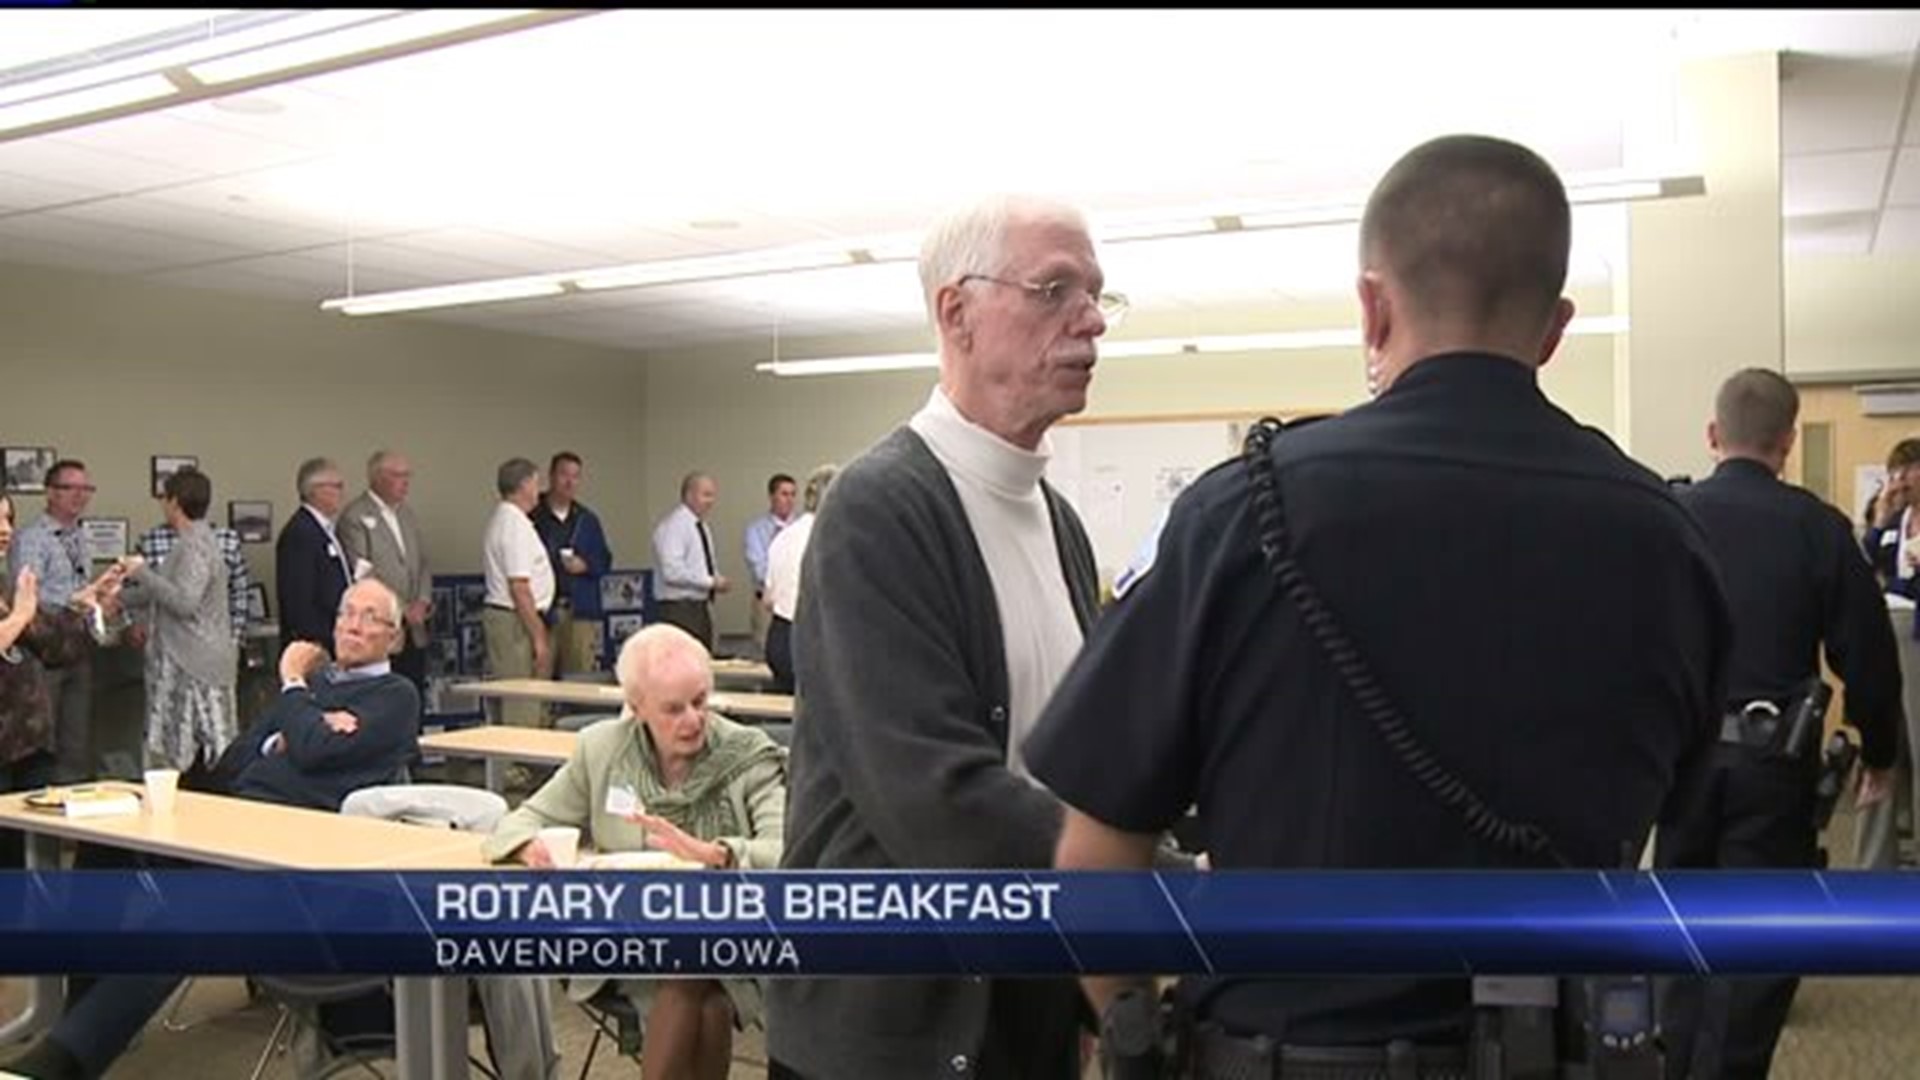 Rotary Club breakfast